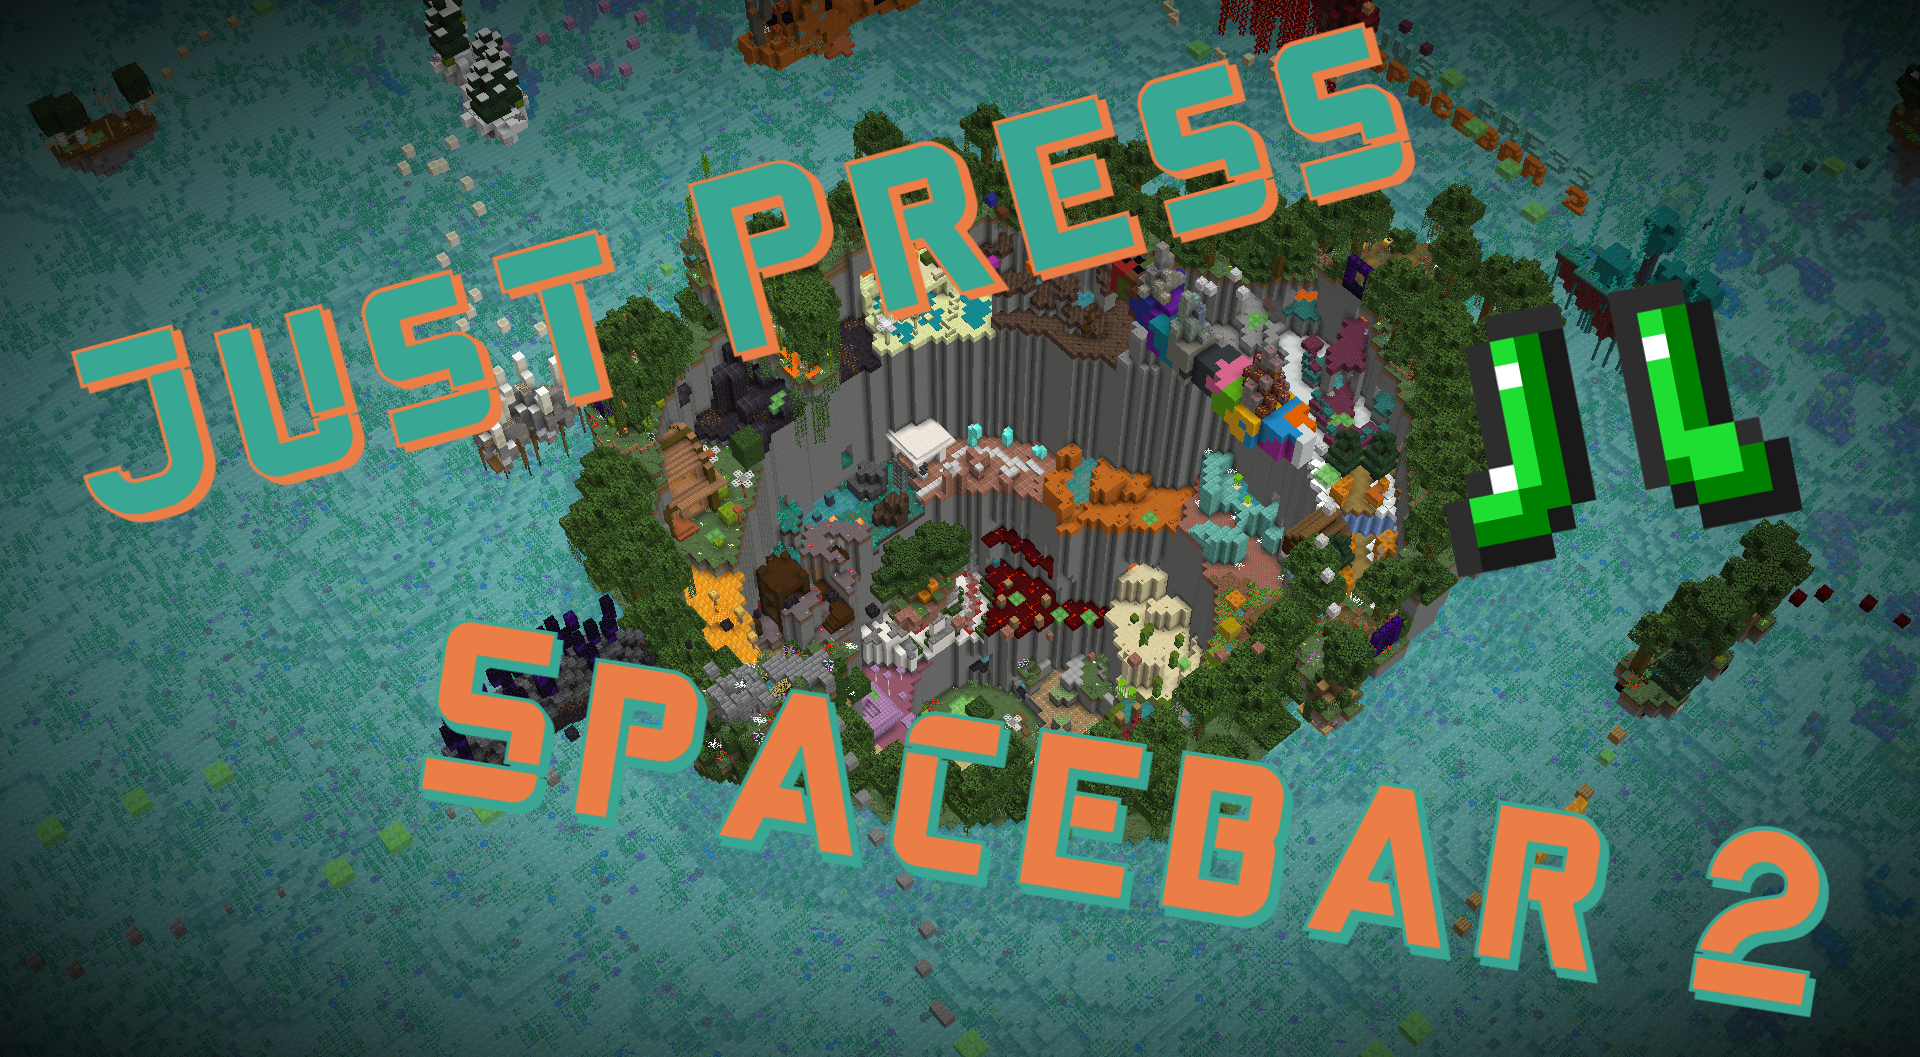 Download Just Press Spacebar 2 for Minecraft 1.16.5